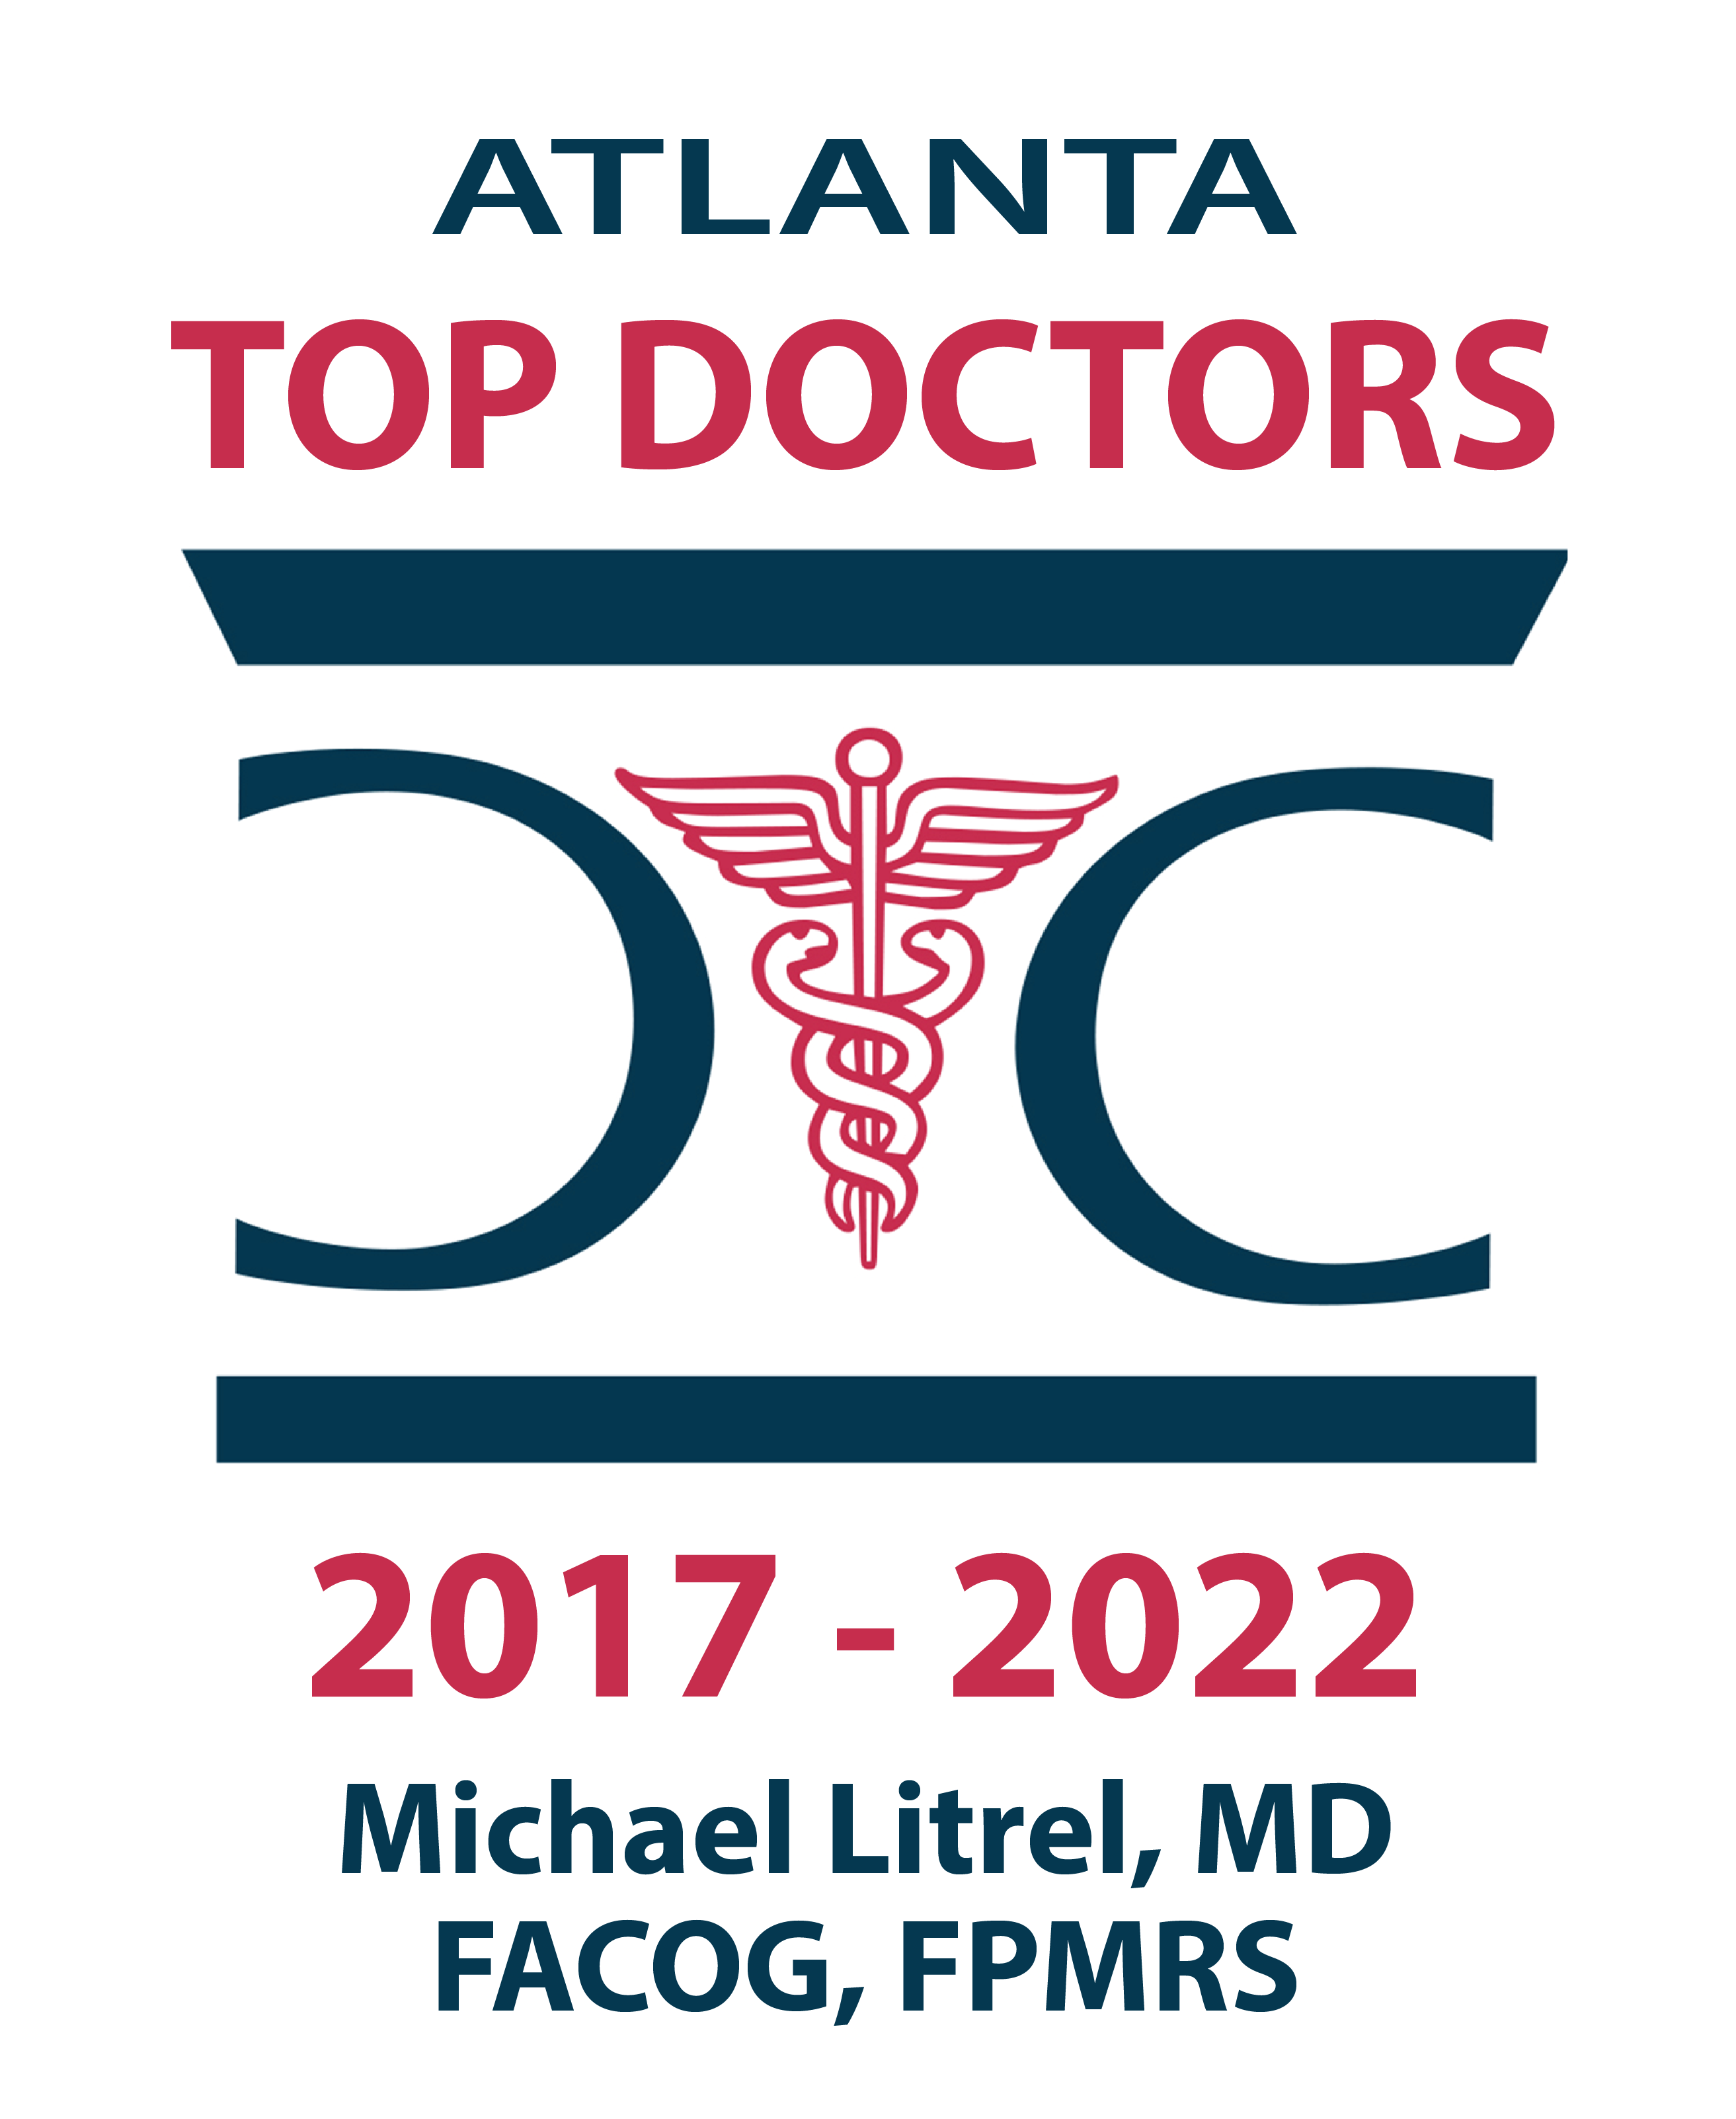 Atlanta Top Doctor Michael Litrel, MD, FACOG, FPMRS